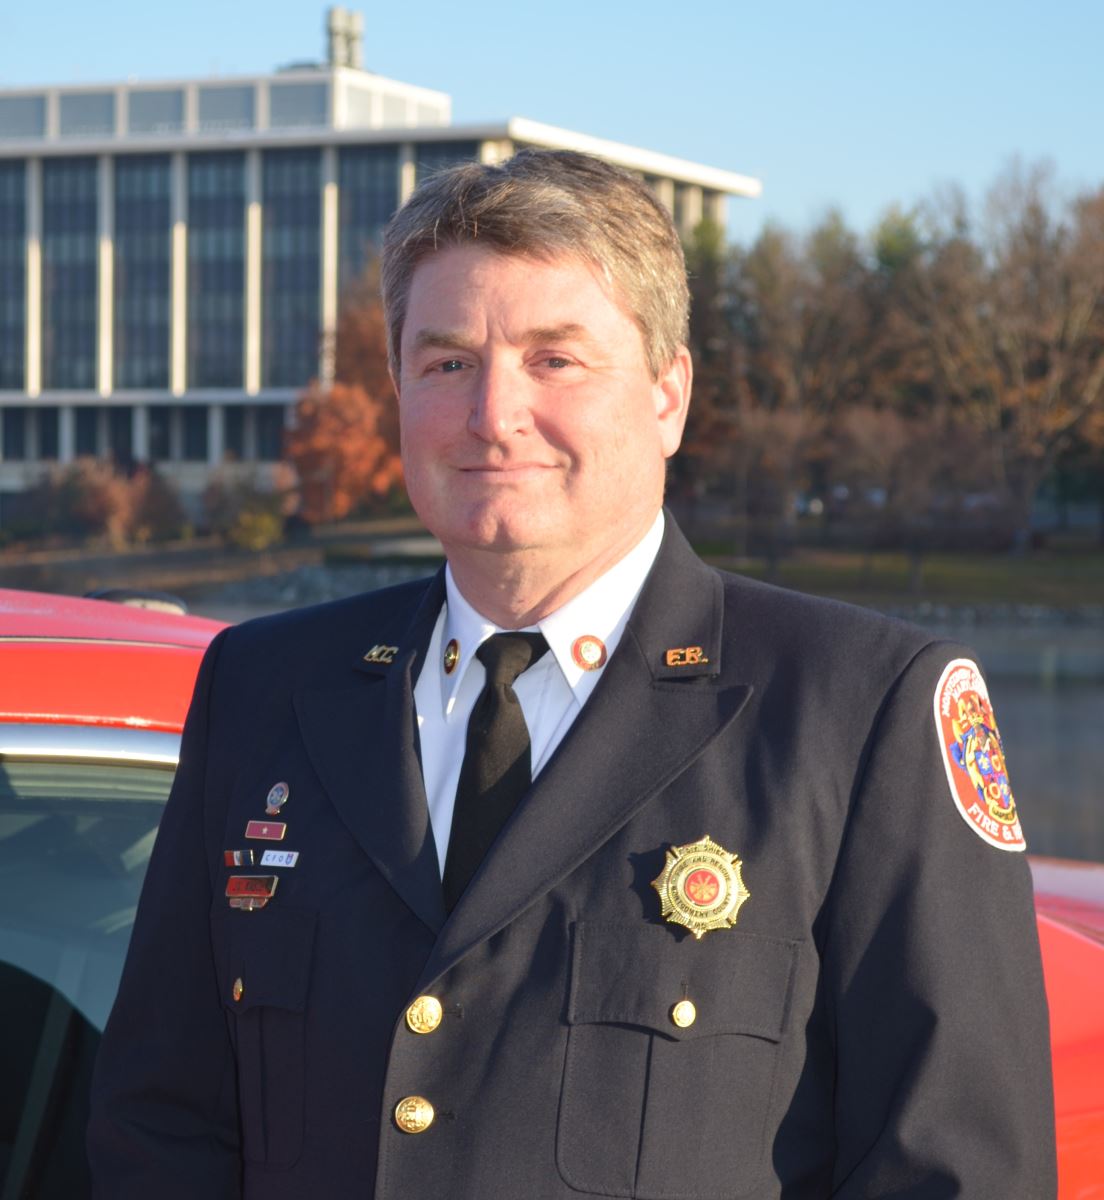 Interim Fire Chief John Kinsley in uniform